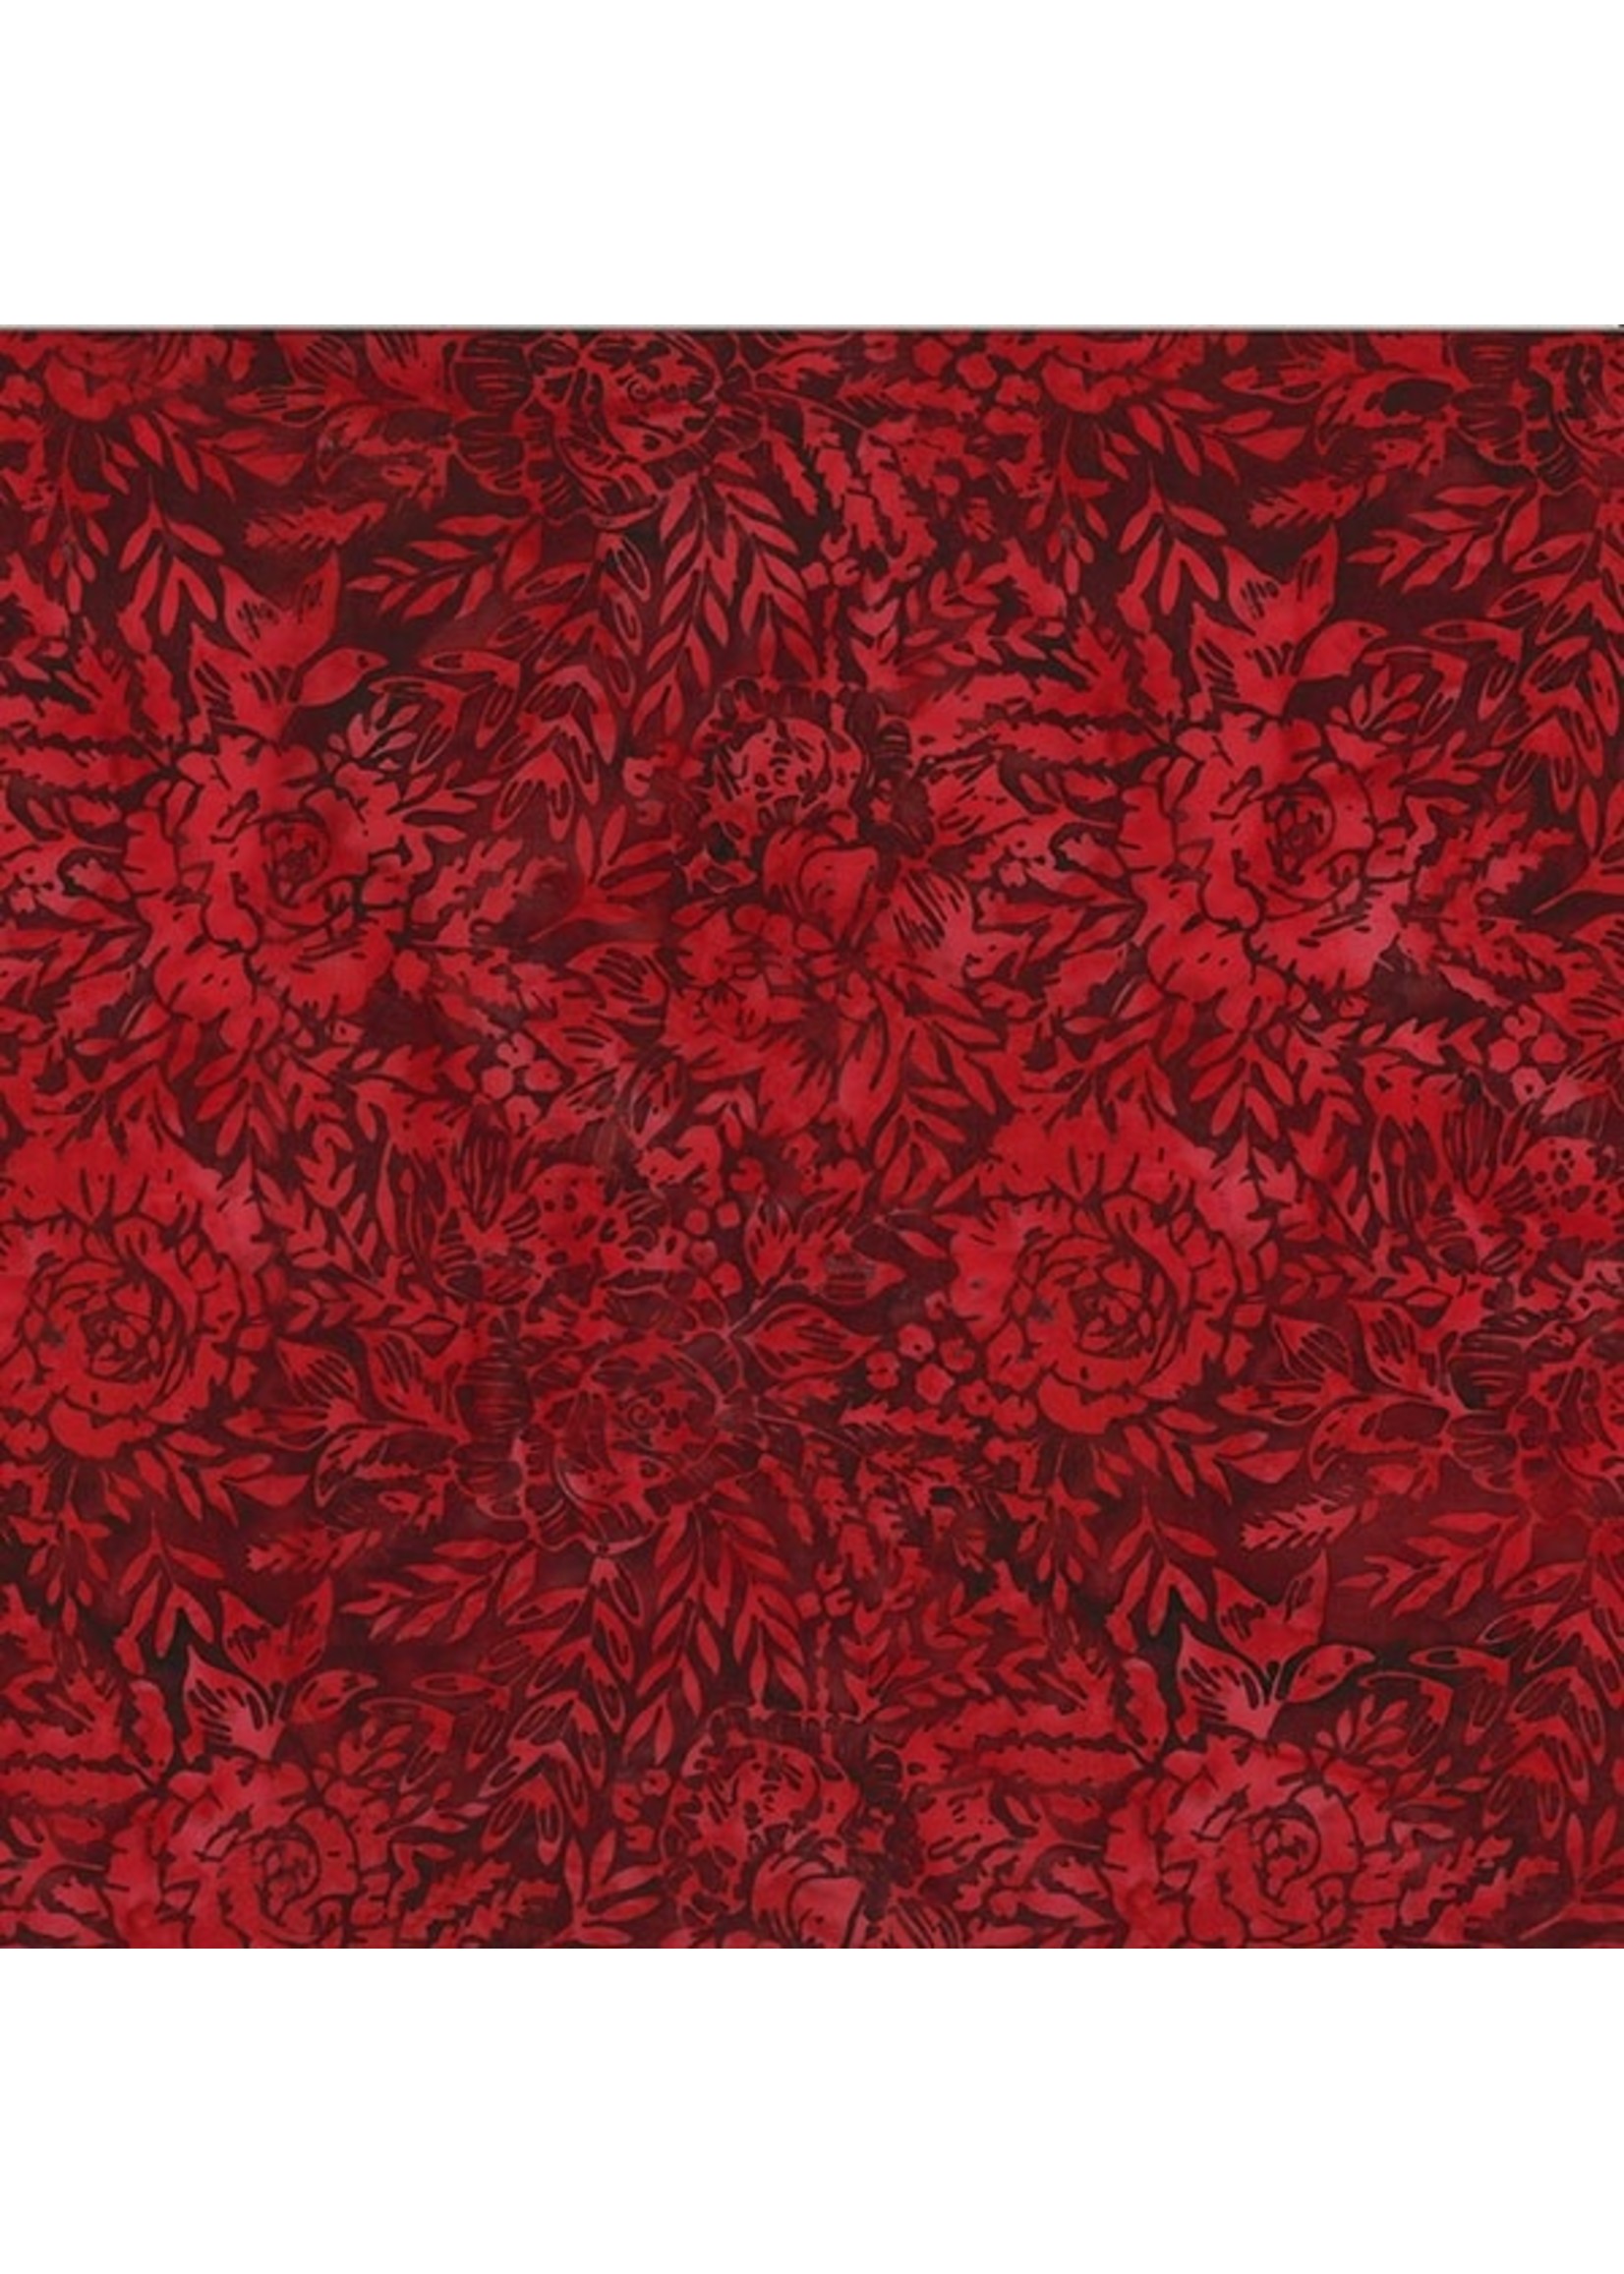 Hoffman Fabrics Bali Hand-Dyed - Red Velvet - 3369-409